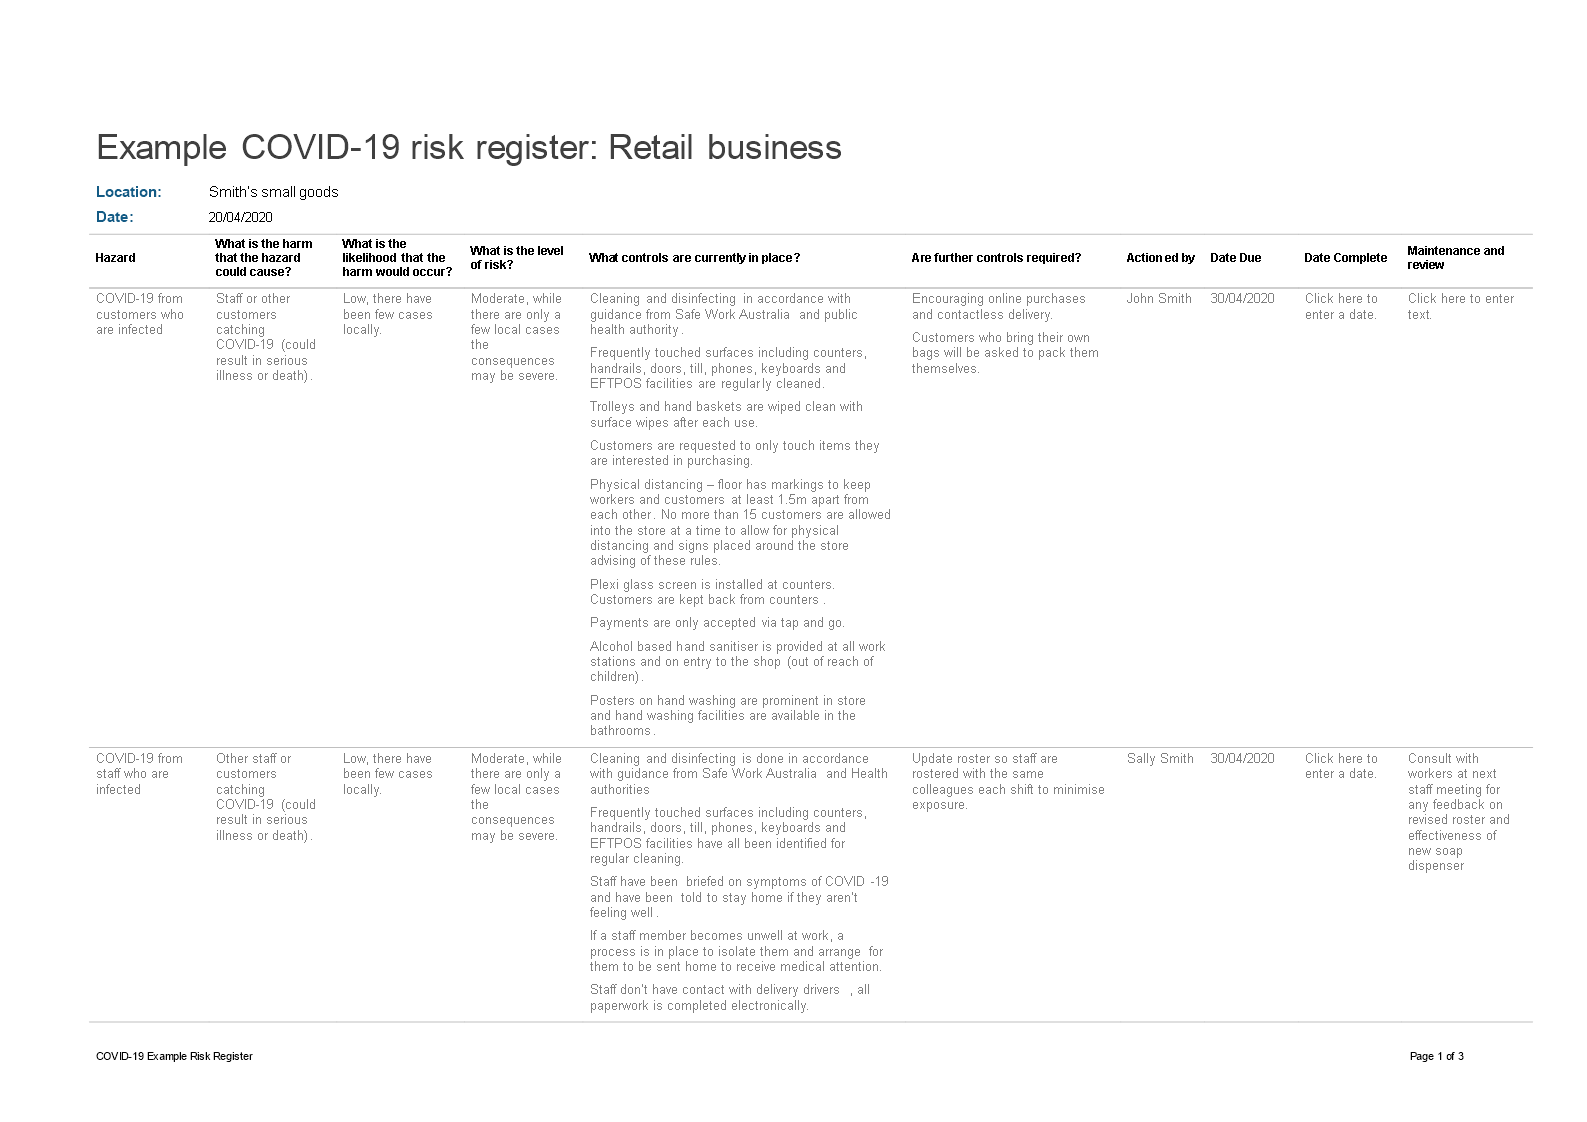 COVID19 Retail Business Risk Register 模板